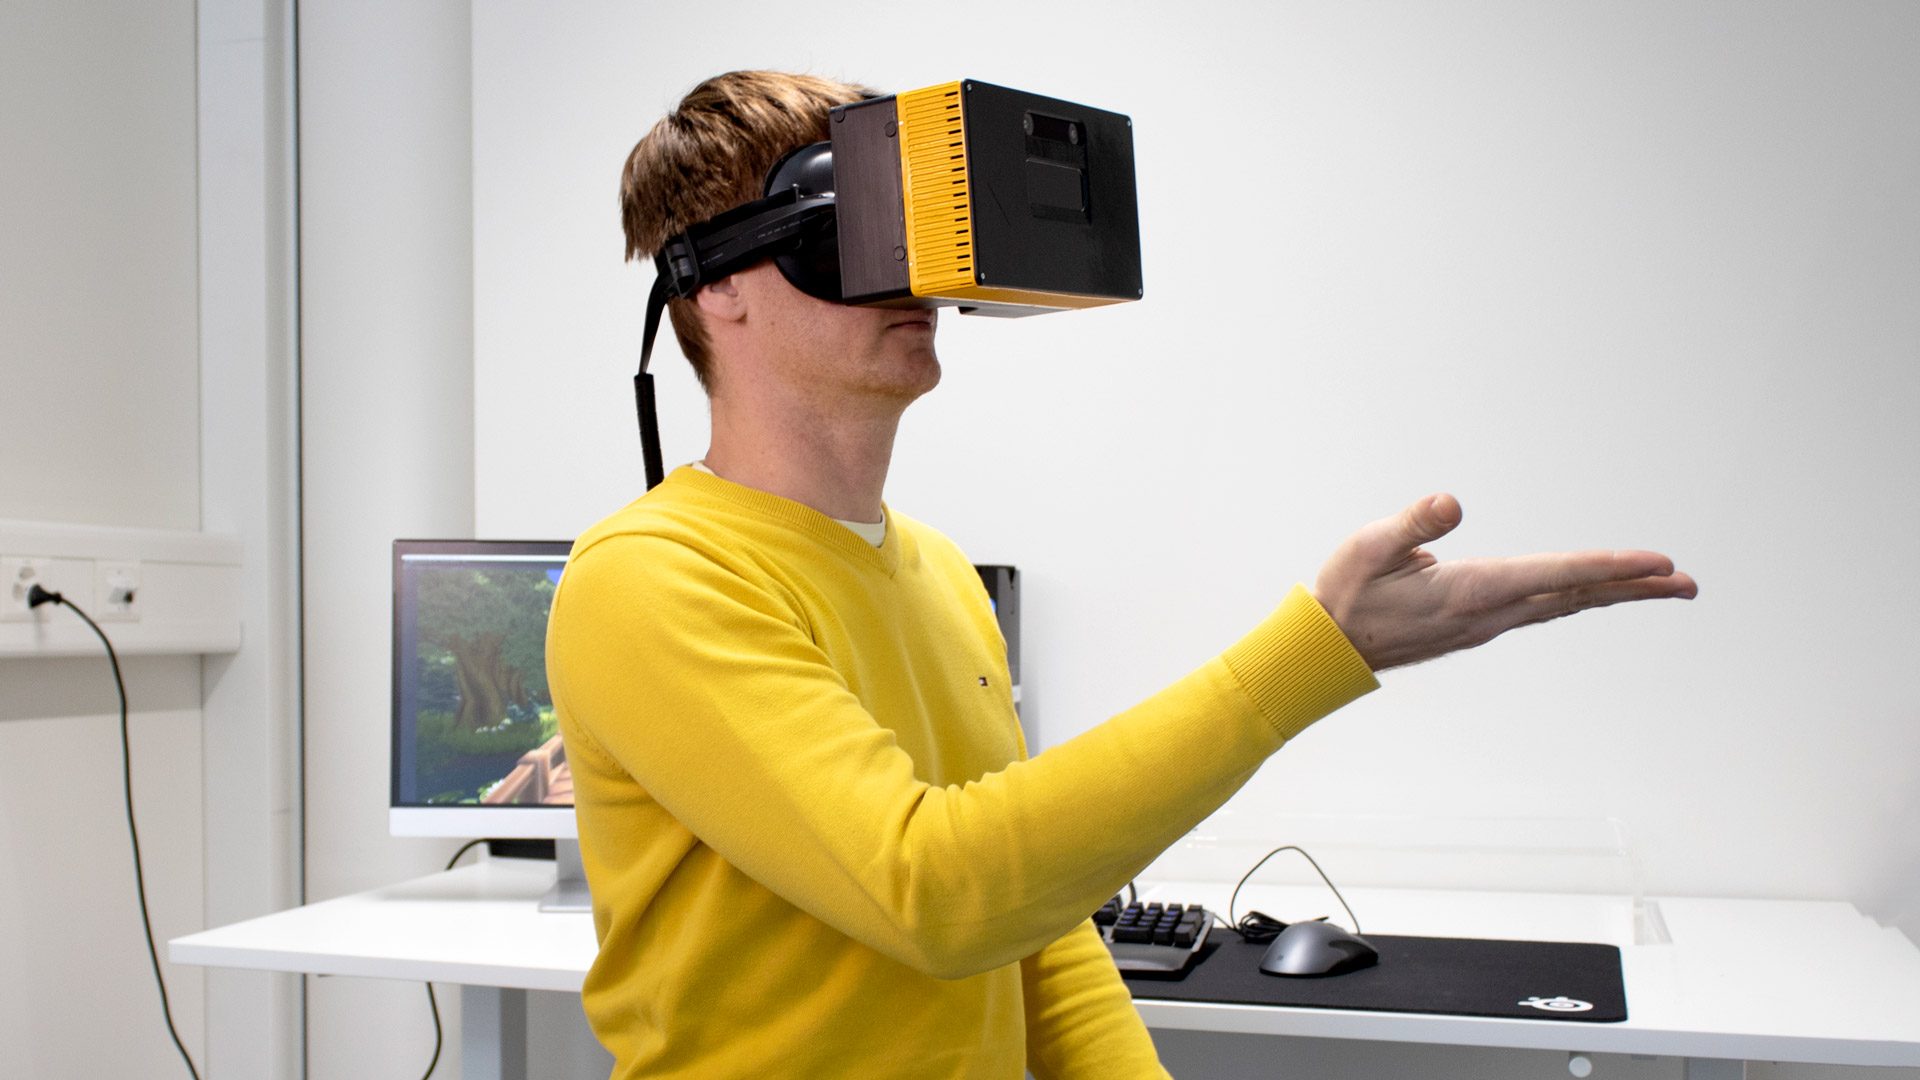 Новинки vr. Прототип очков дополненной реальности. VR очки Apple. Apple VR презентовали. VR очки дети.